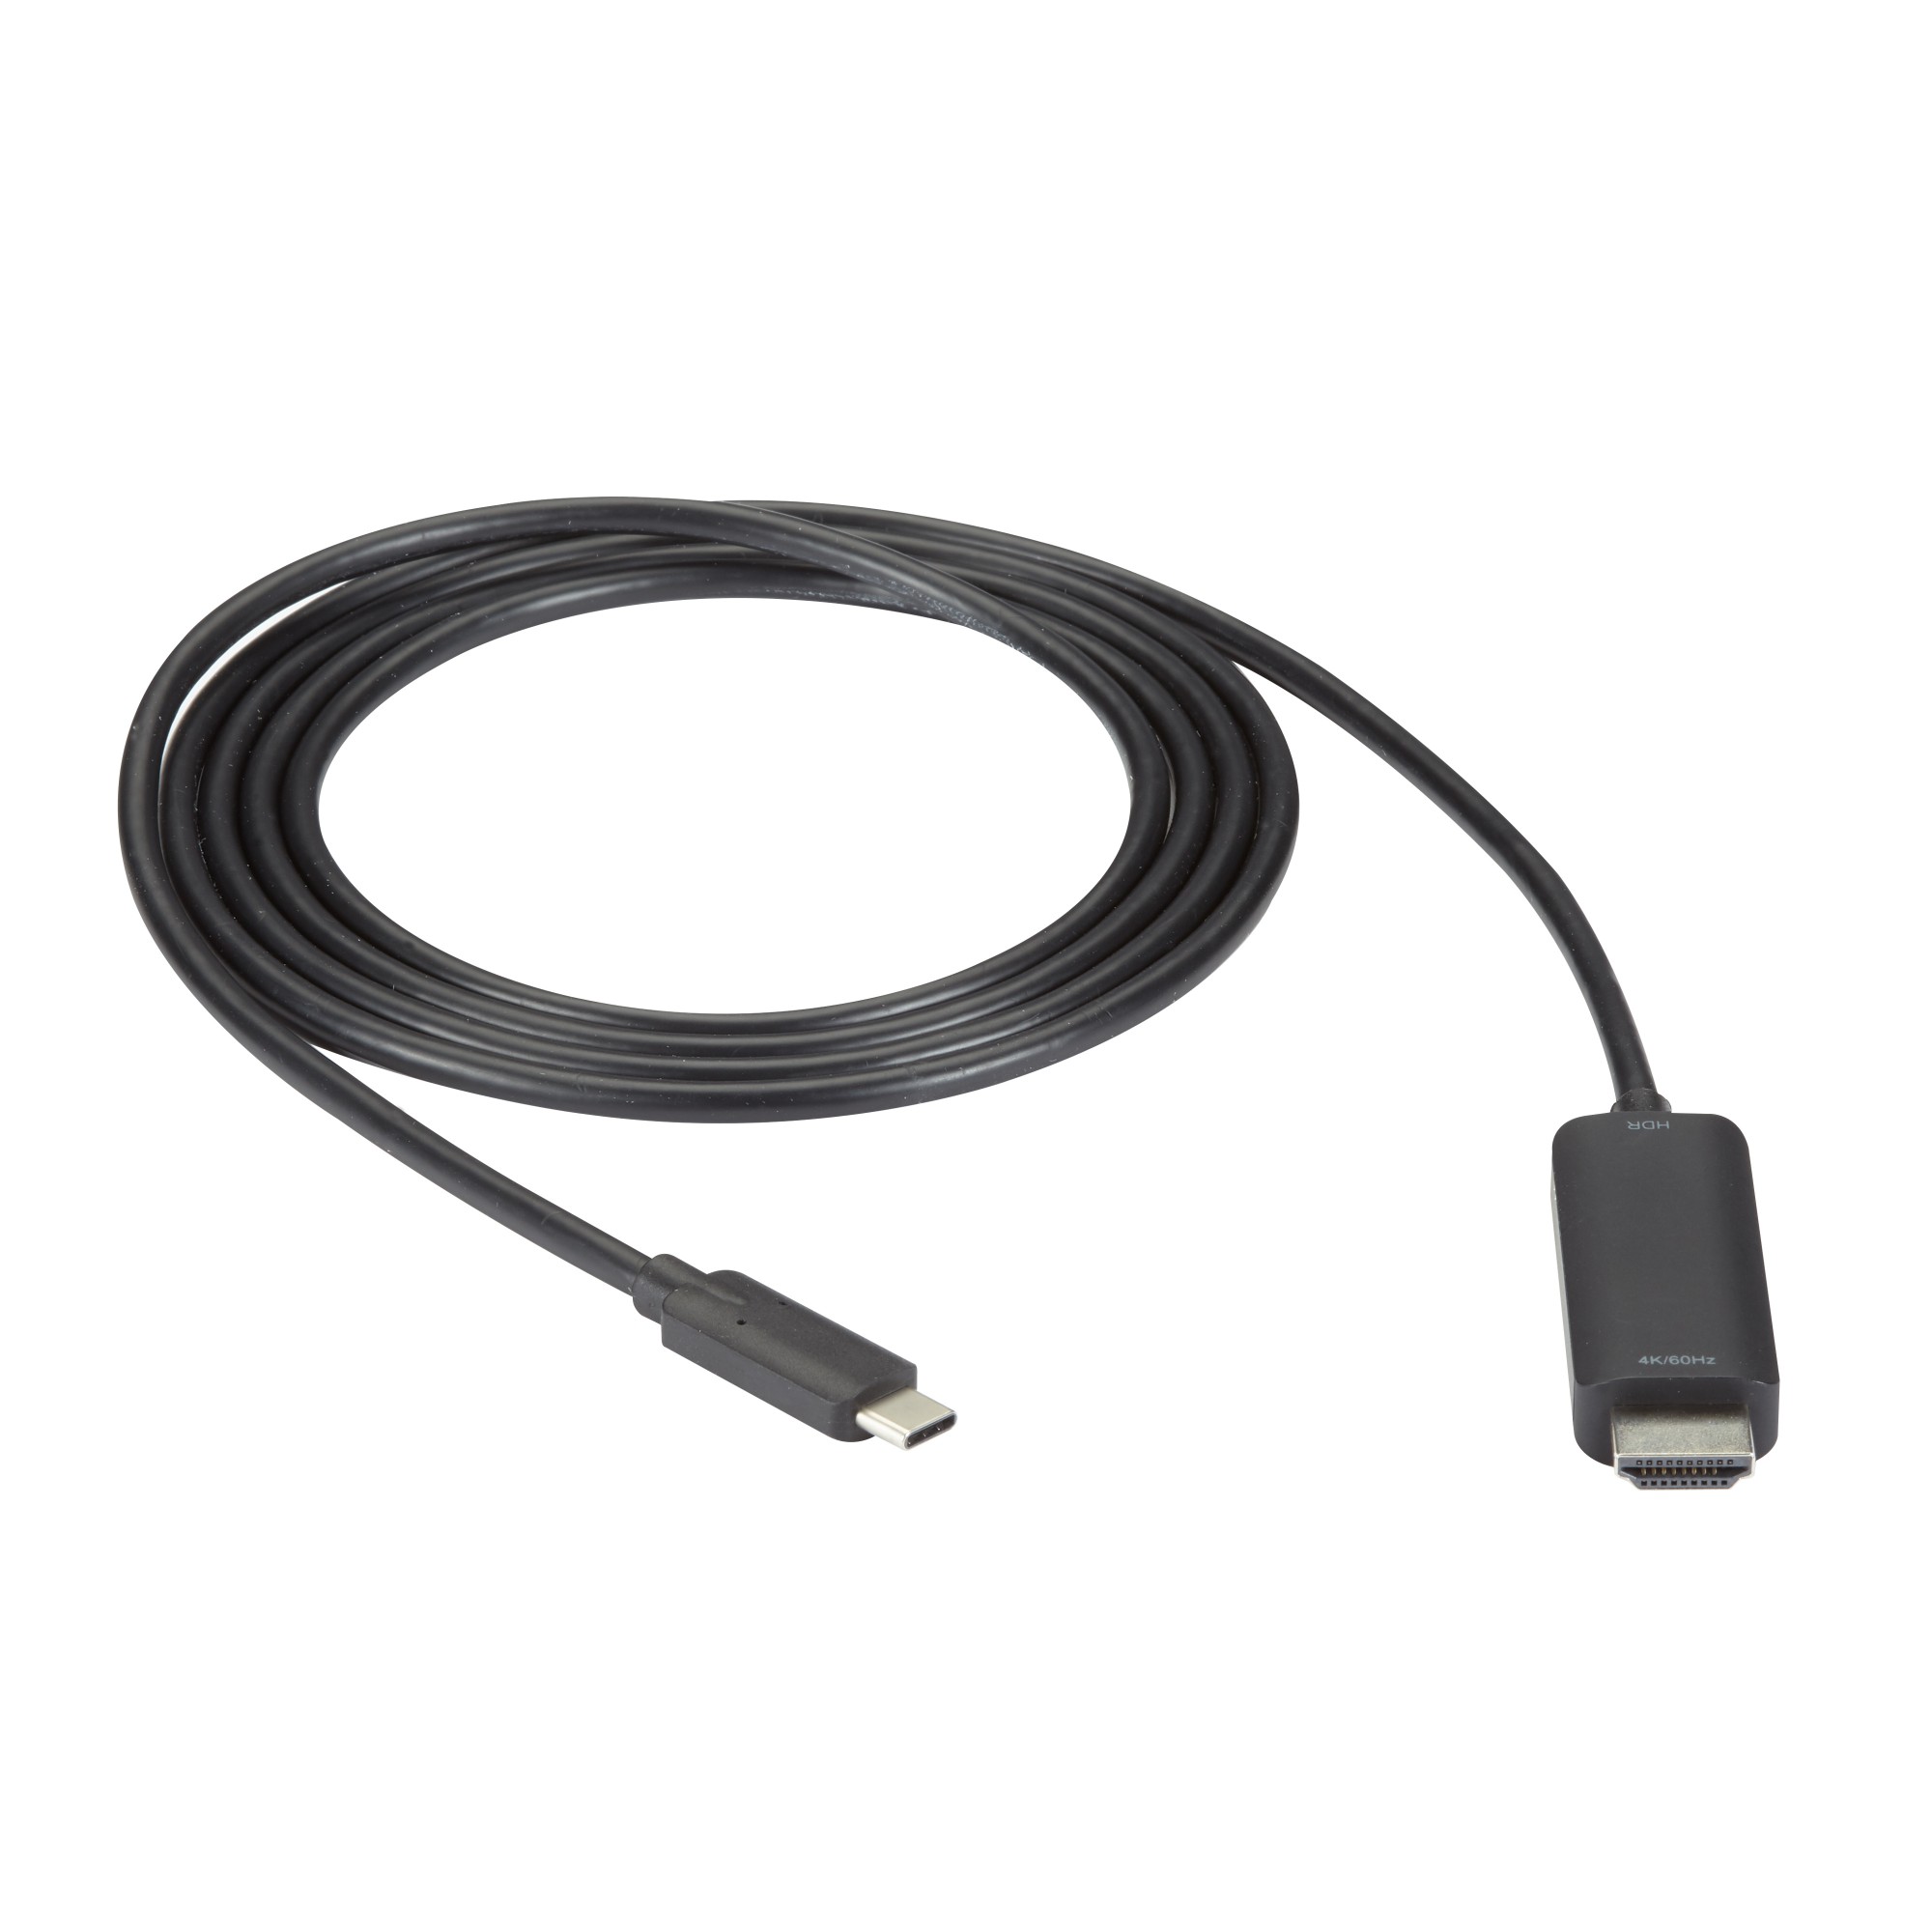 VA-USBC31-HDR4K-006 BLACK BOX USB-C ADAPTER CABLE - USB-C TO HDMI 2.0 ACTIVE ADAPTER, 4K60, HDR, HDCP 2.2, DP